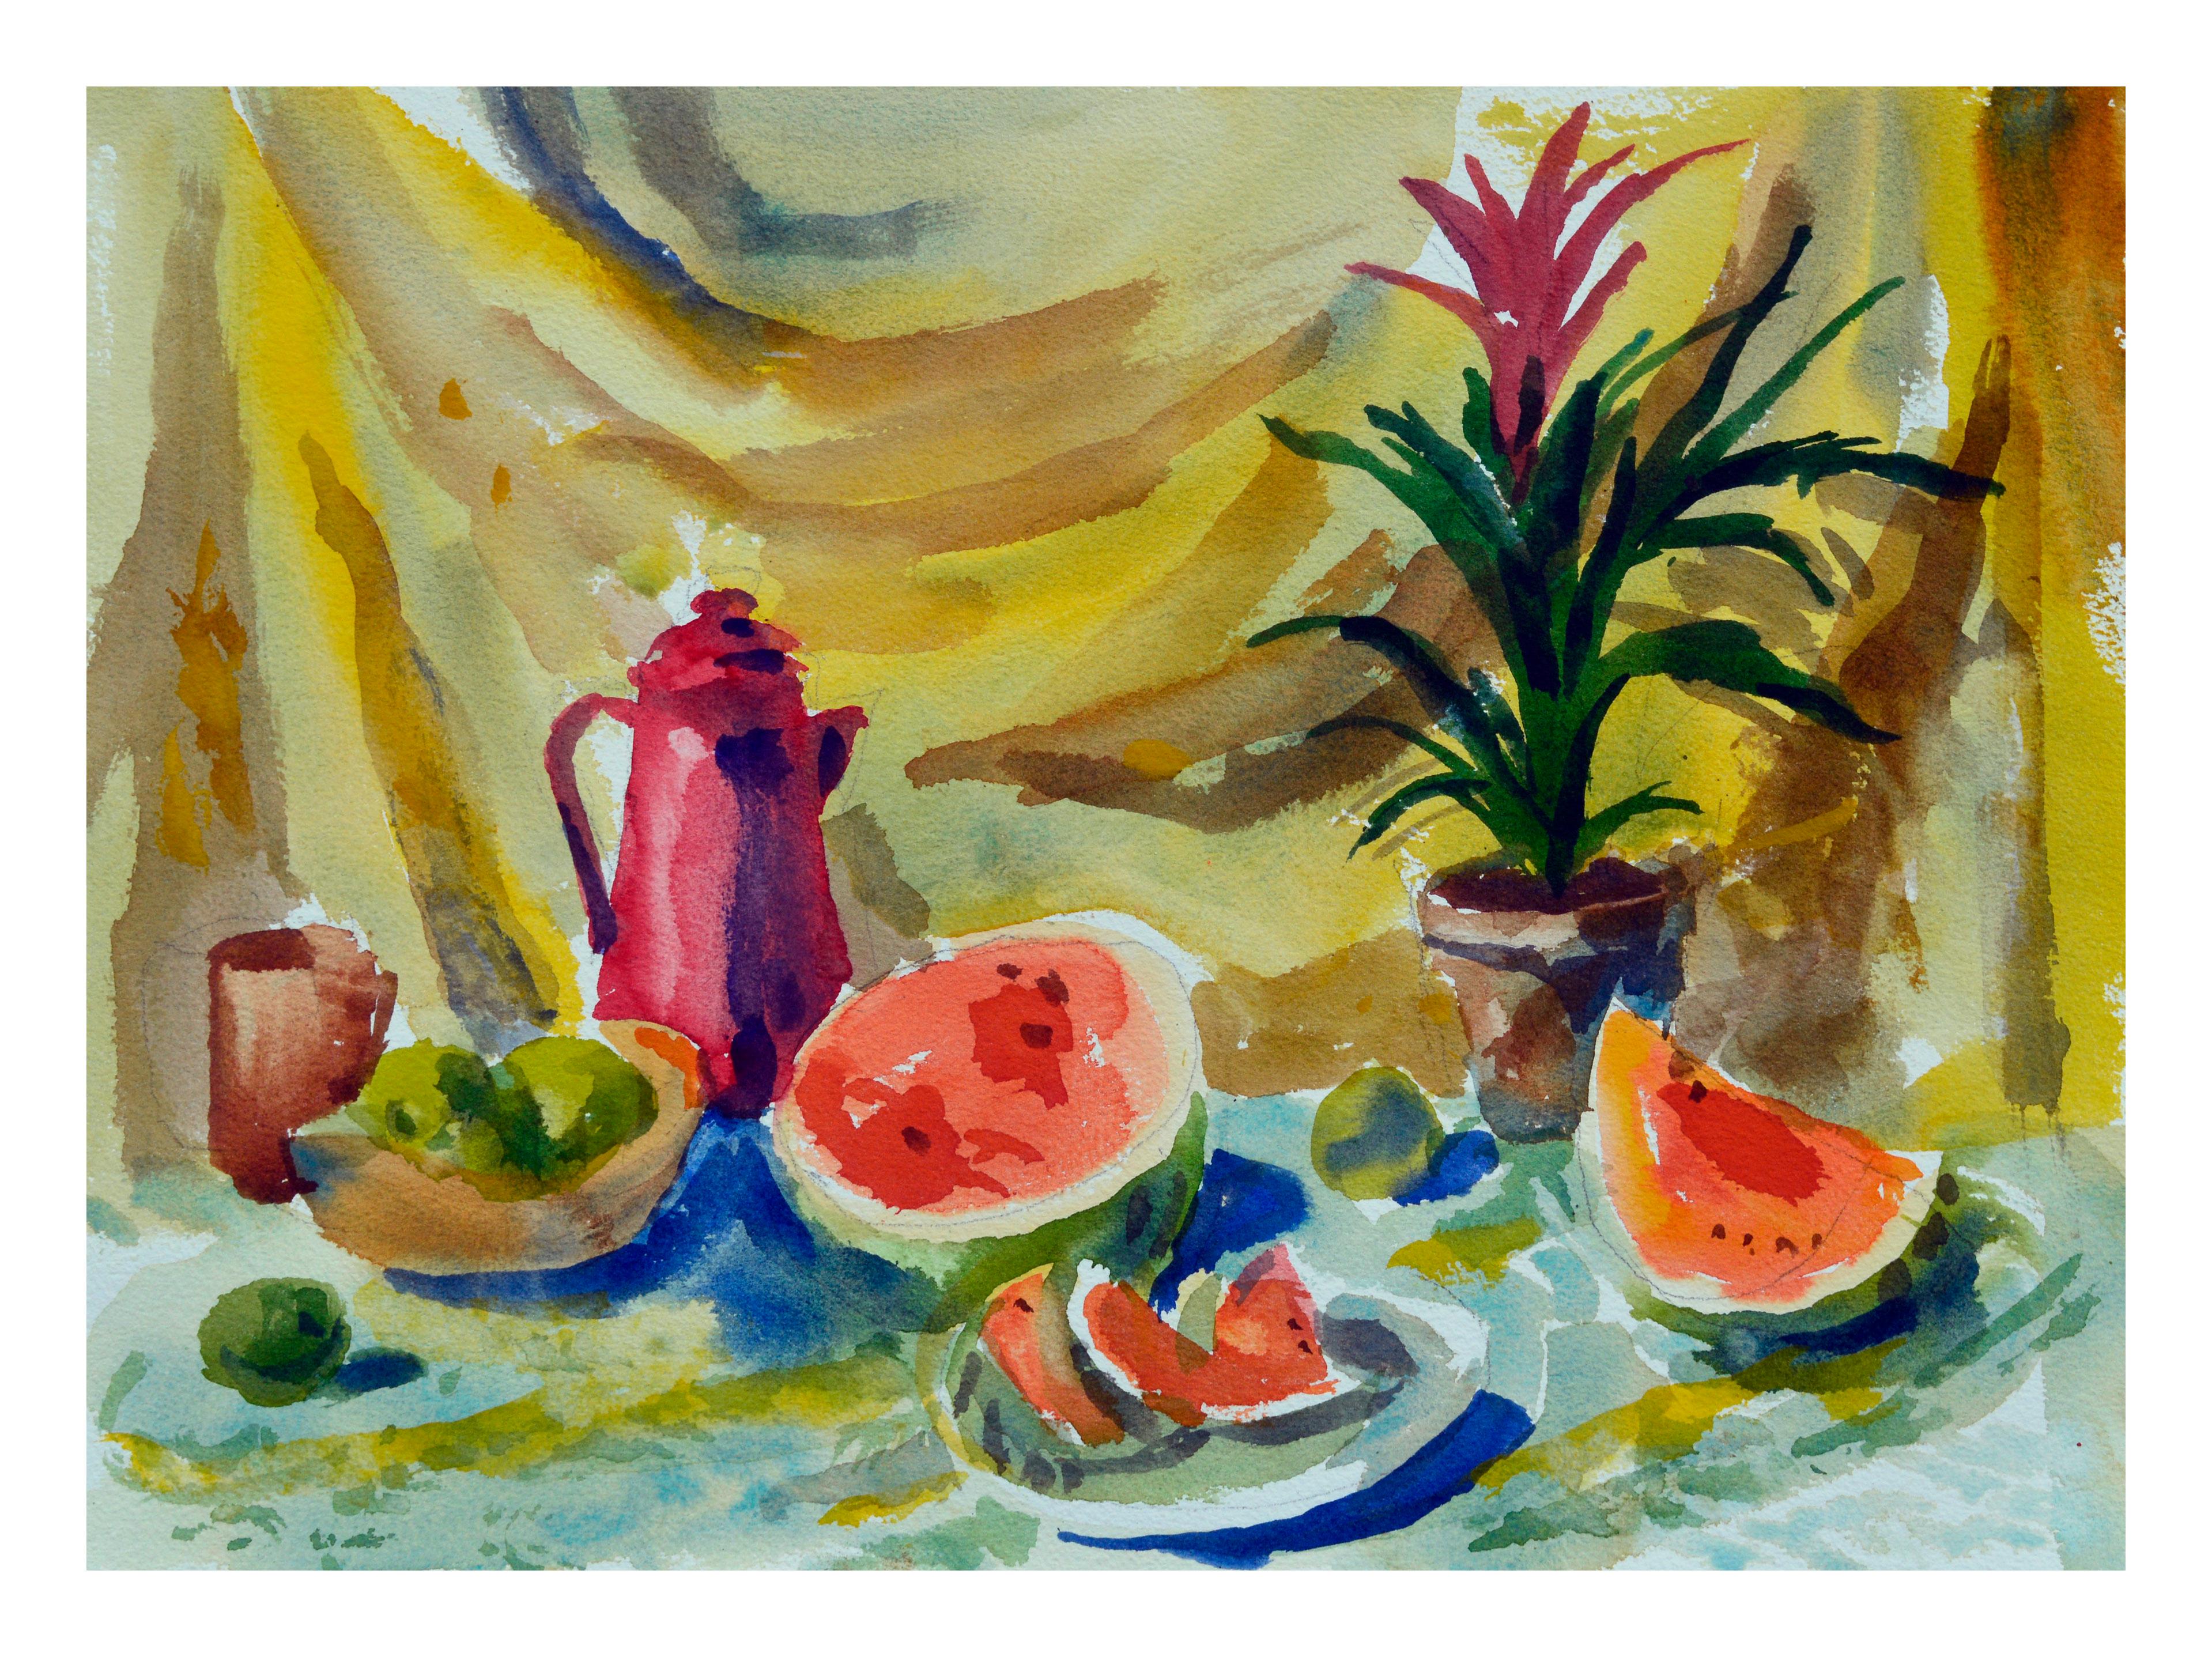 Les Anderson Landscape Painting - Watermelon Still Life